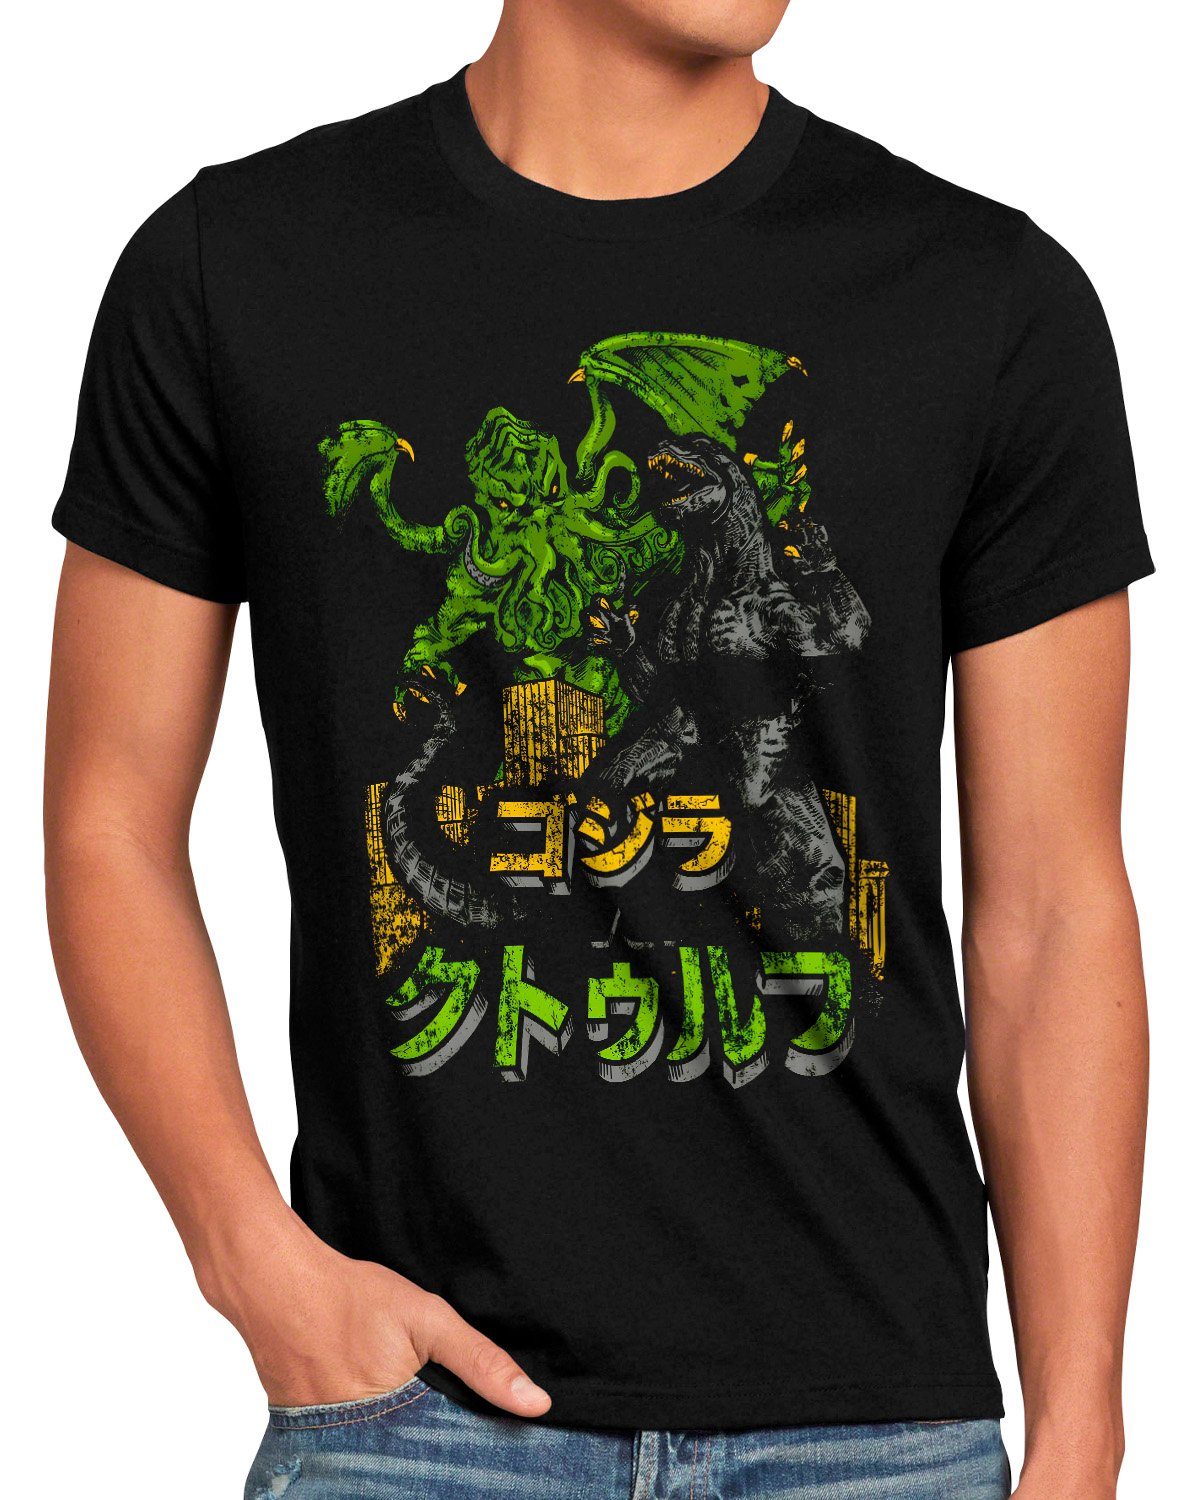 Print-Shirt kaiju style3 godzilla tokio japan nippon monster